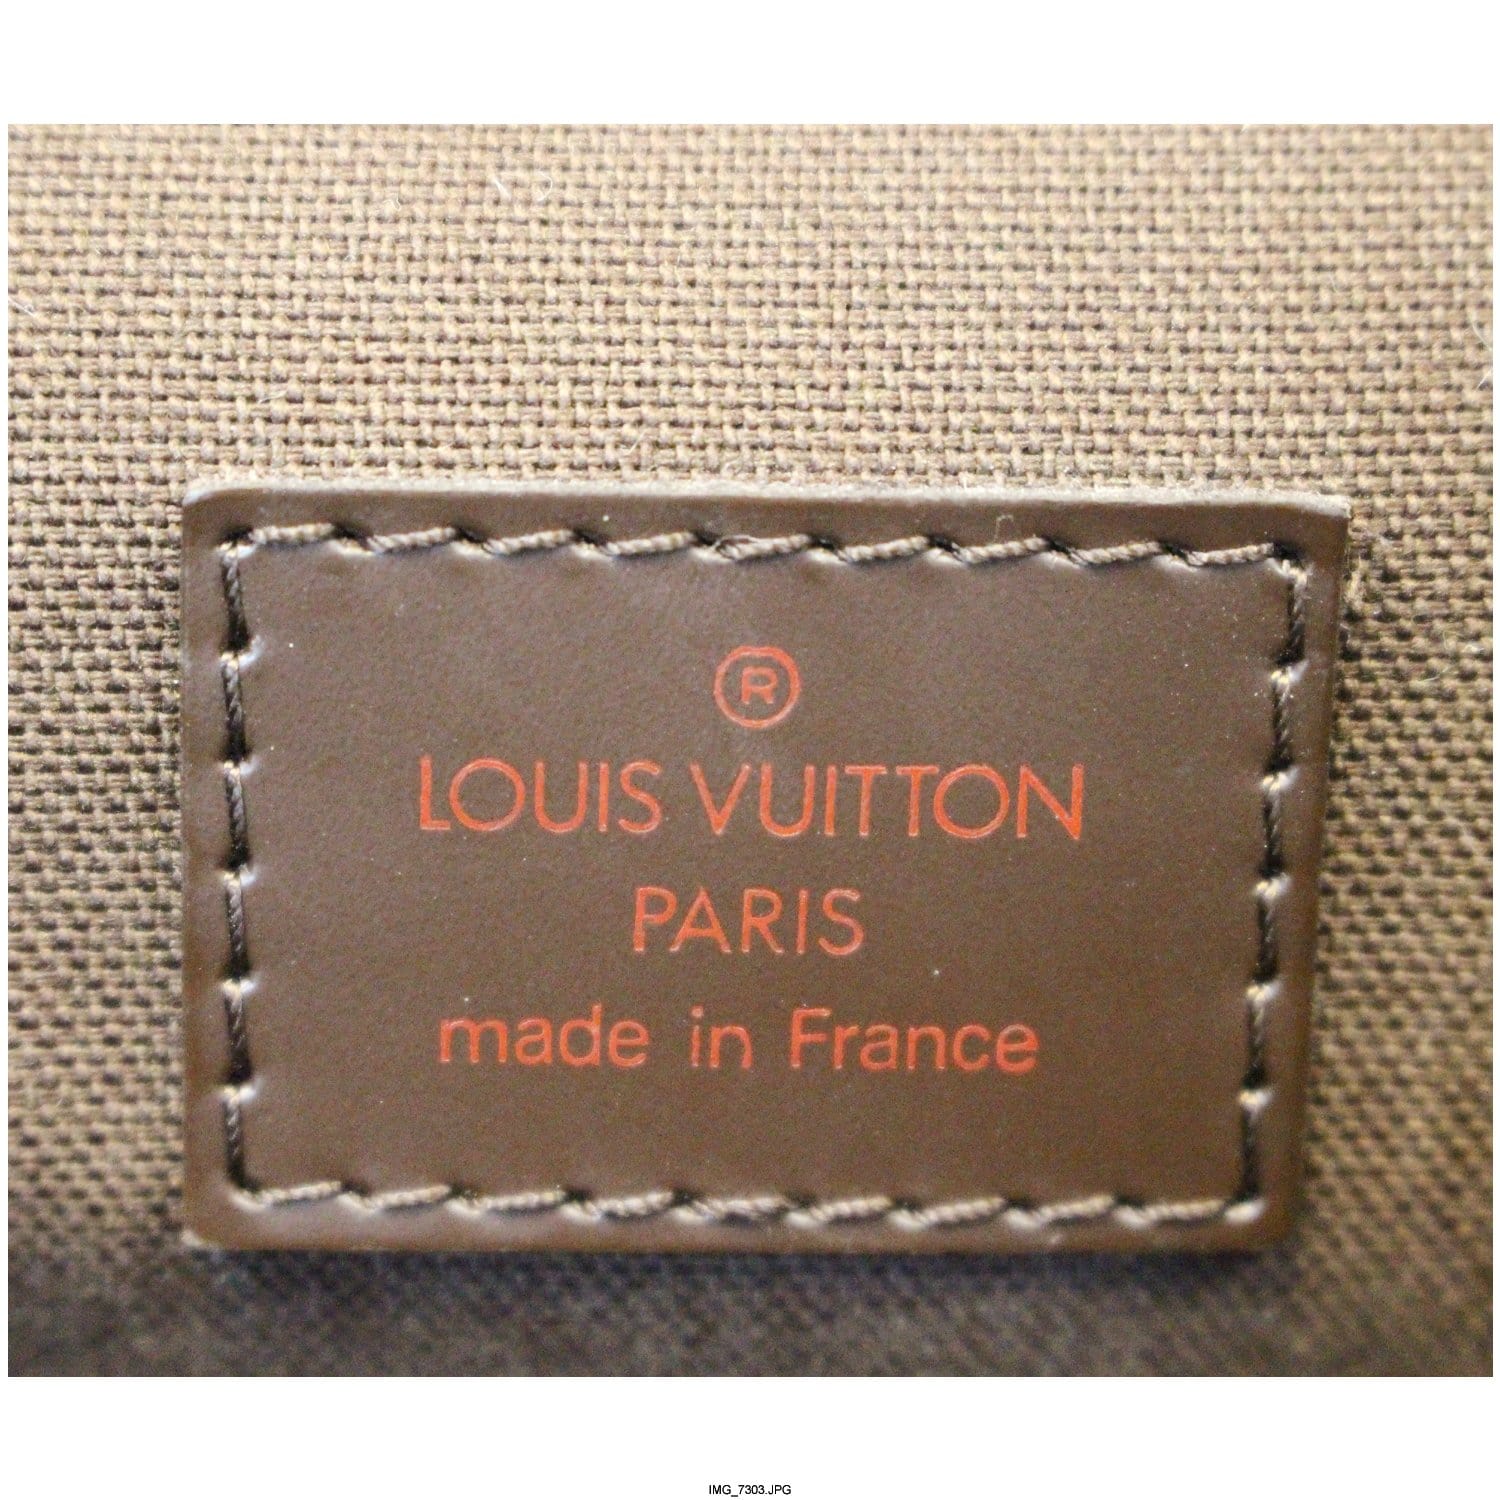 Louis Vuitton Reporter Melville Bag Damier at 1stDibs